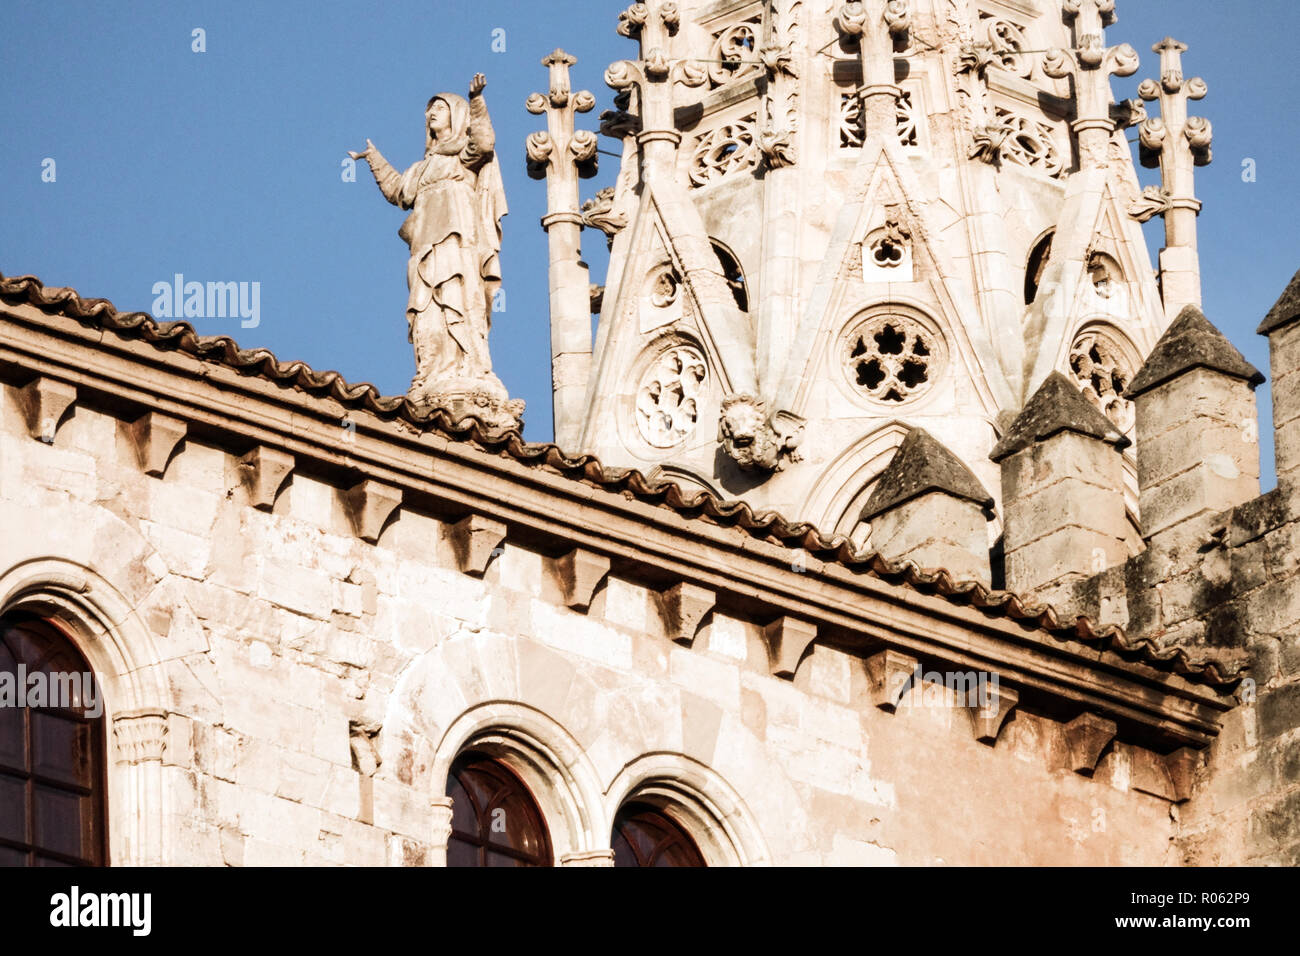 La Seu Kathedrale Palma Mallorca Kathedrale, Detail der Statue der Heiligen Maria, Spanien Kathedralen Stockfoto